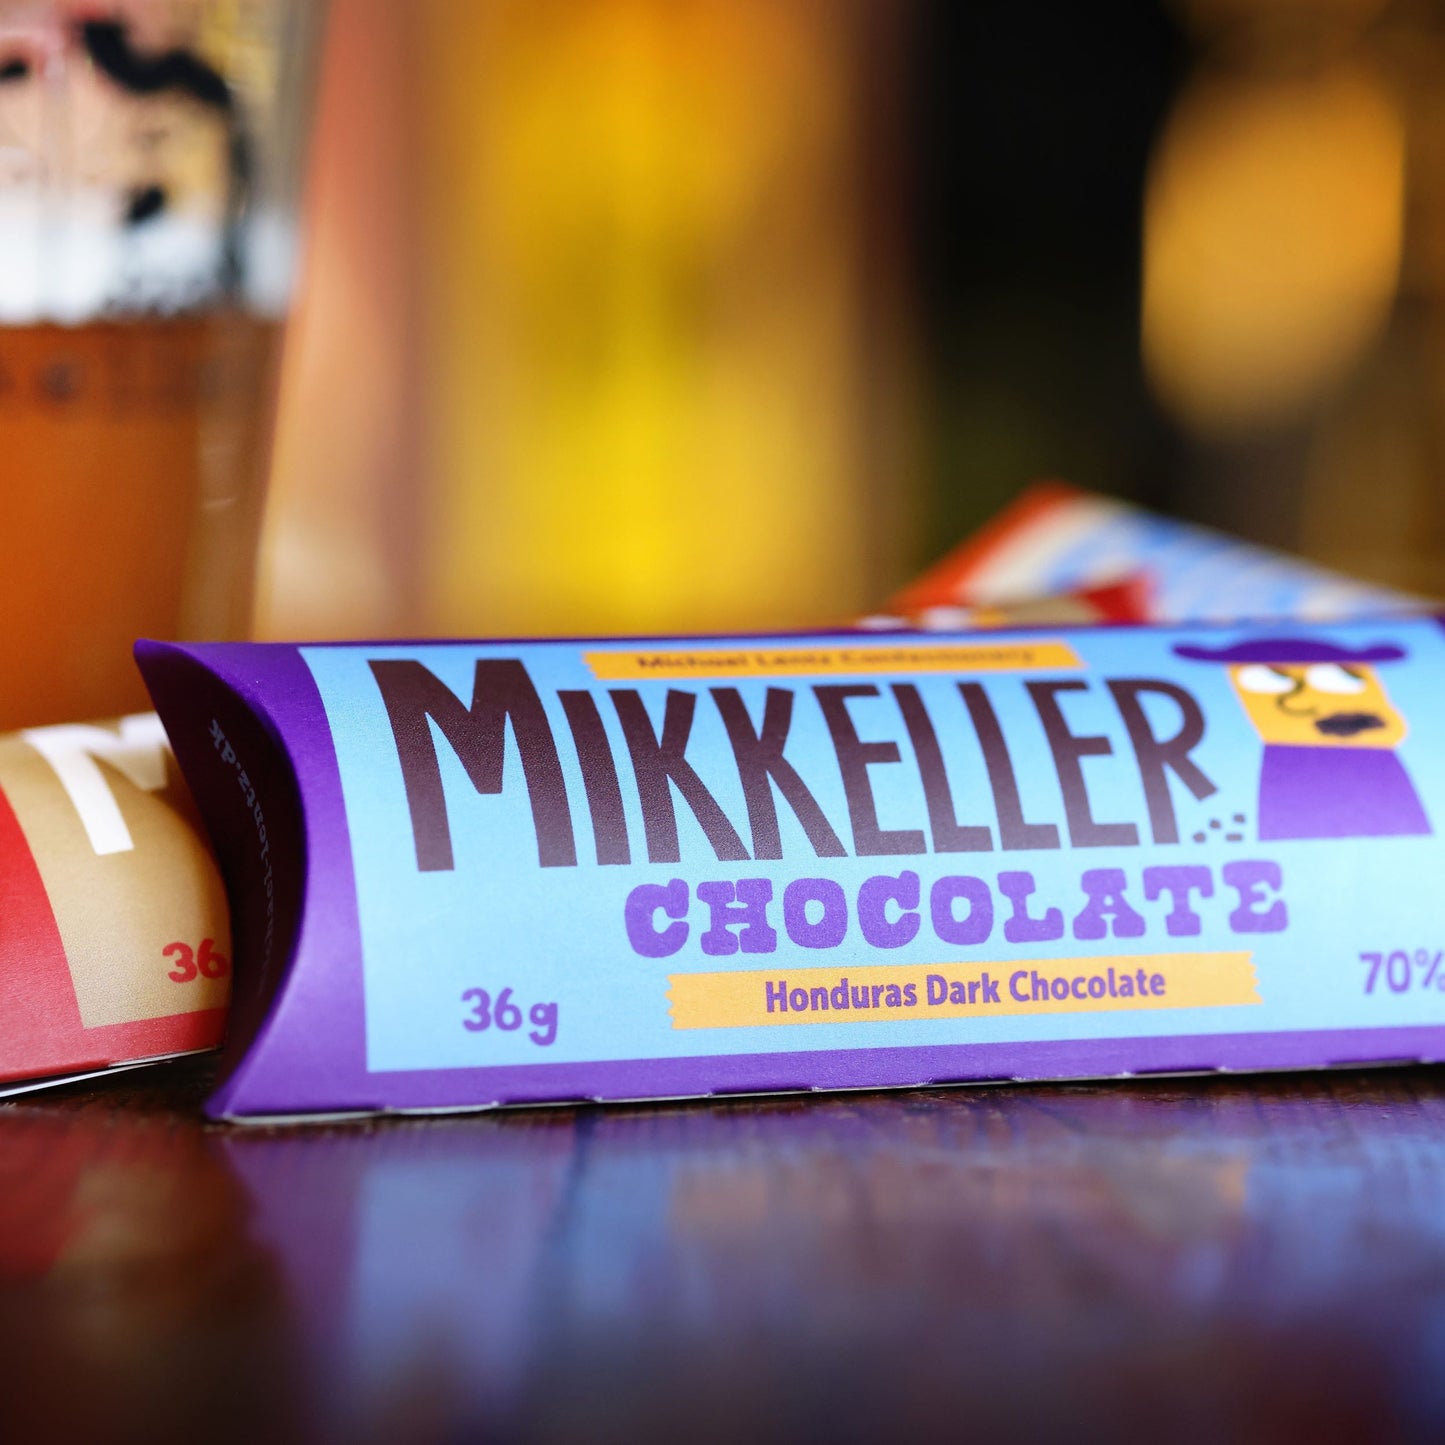 Mikkeller - Honduras Dark Chocolate 70%, small bar